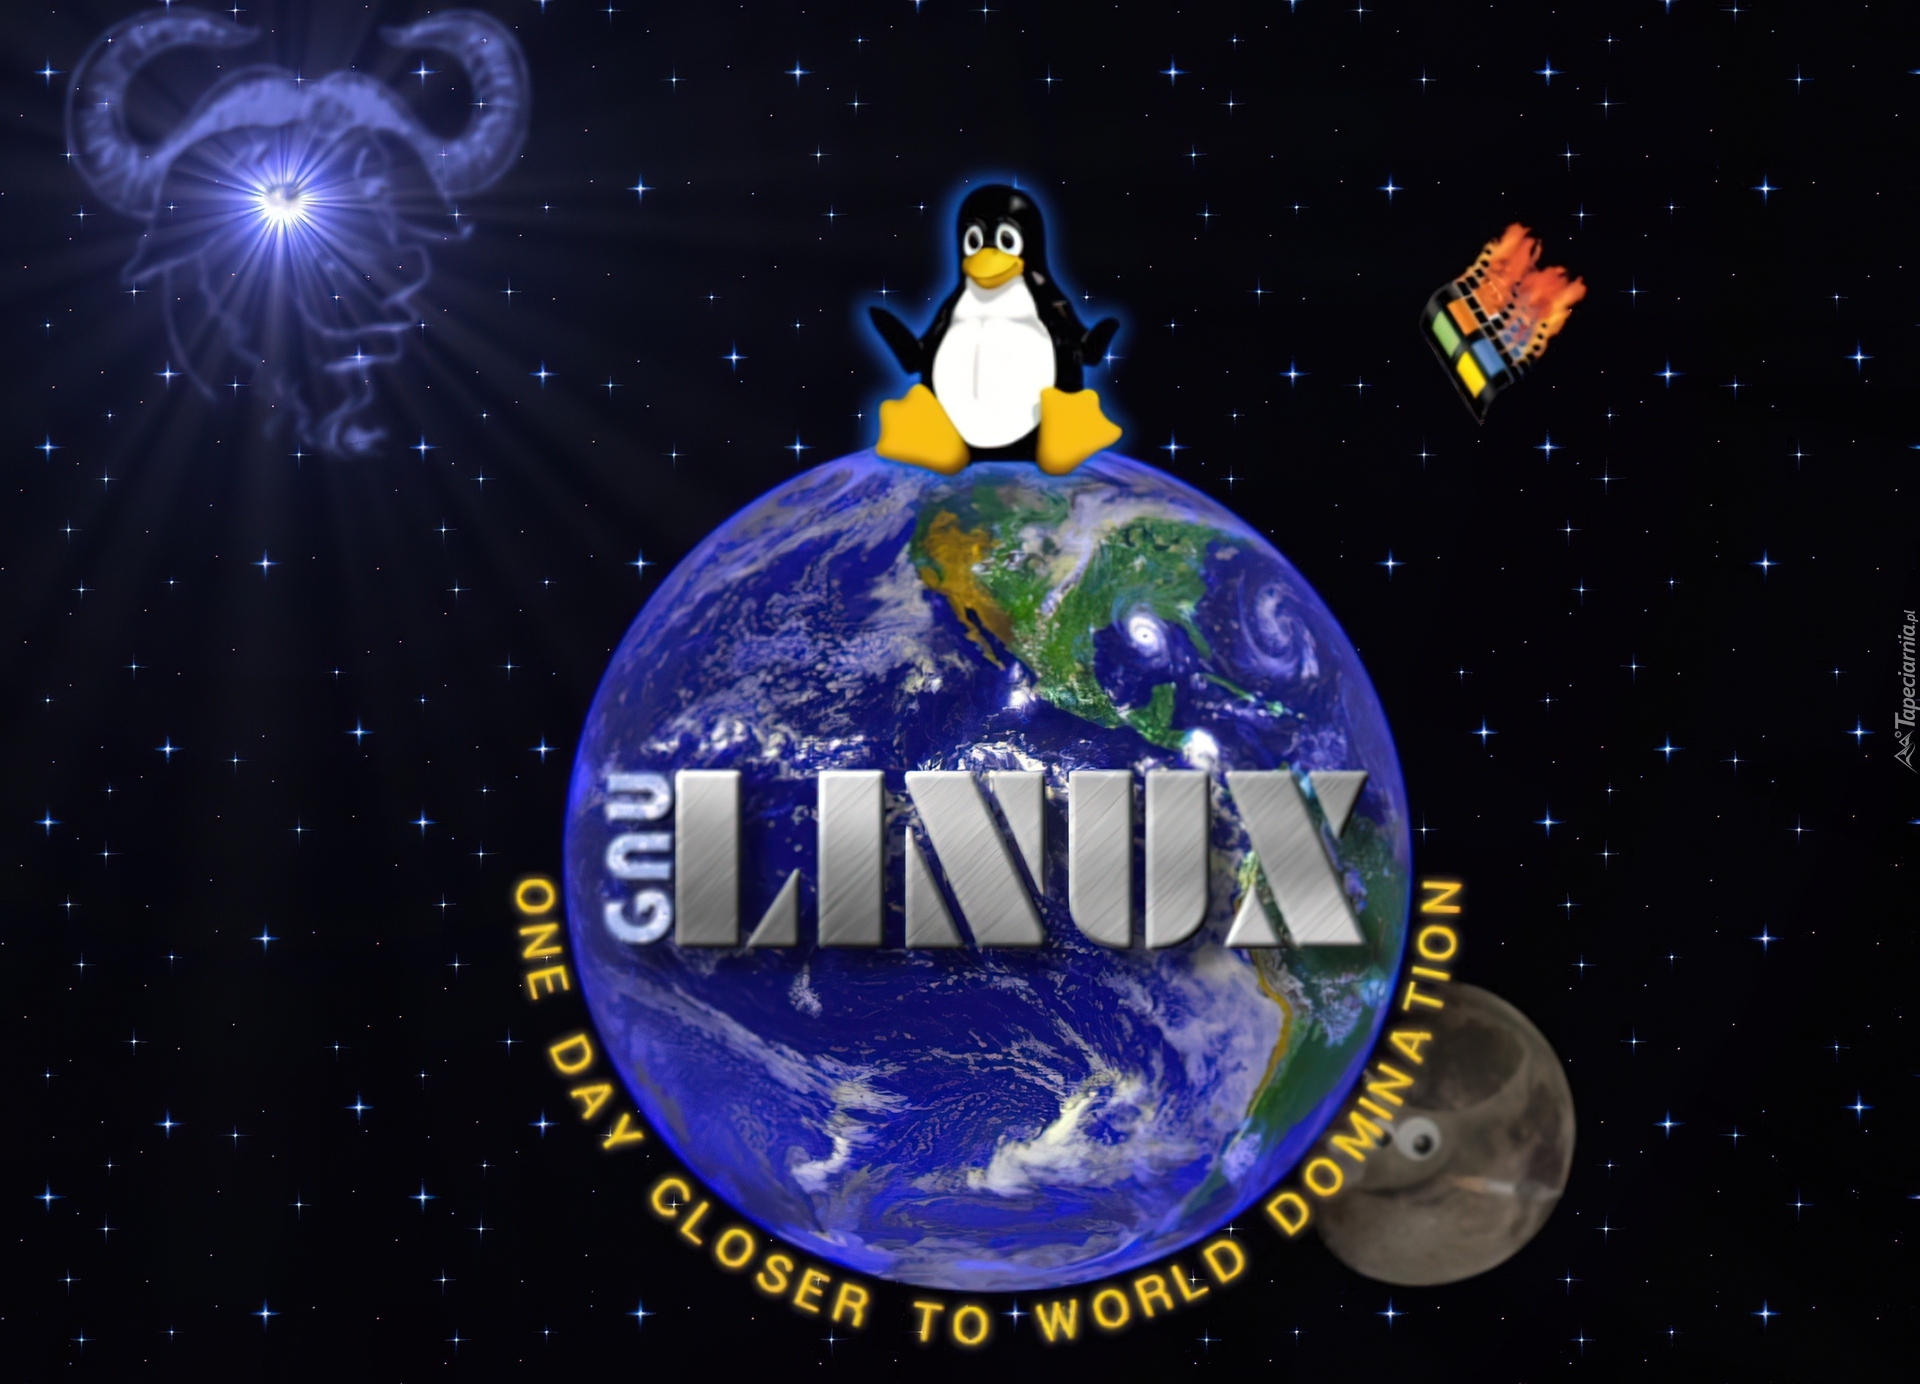 Linux, Pingwin, Kula, Ziemska